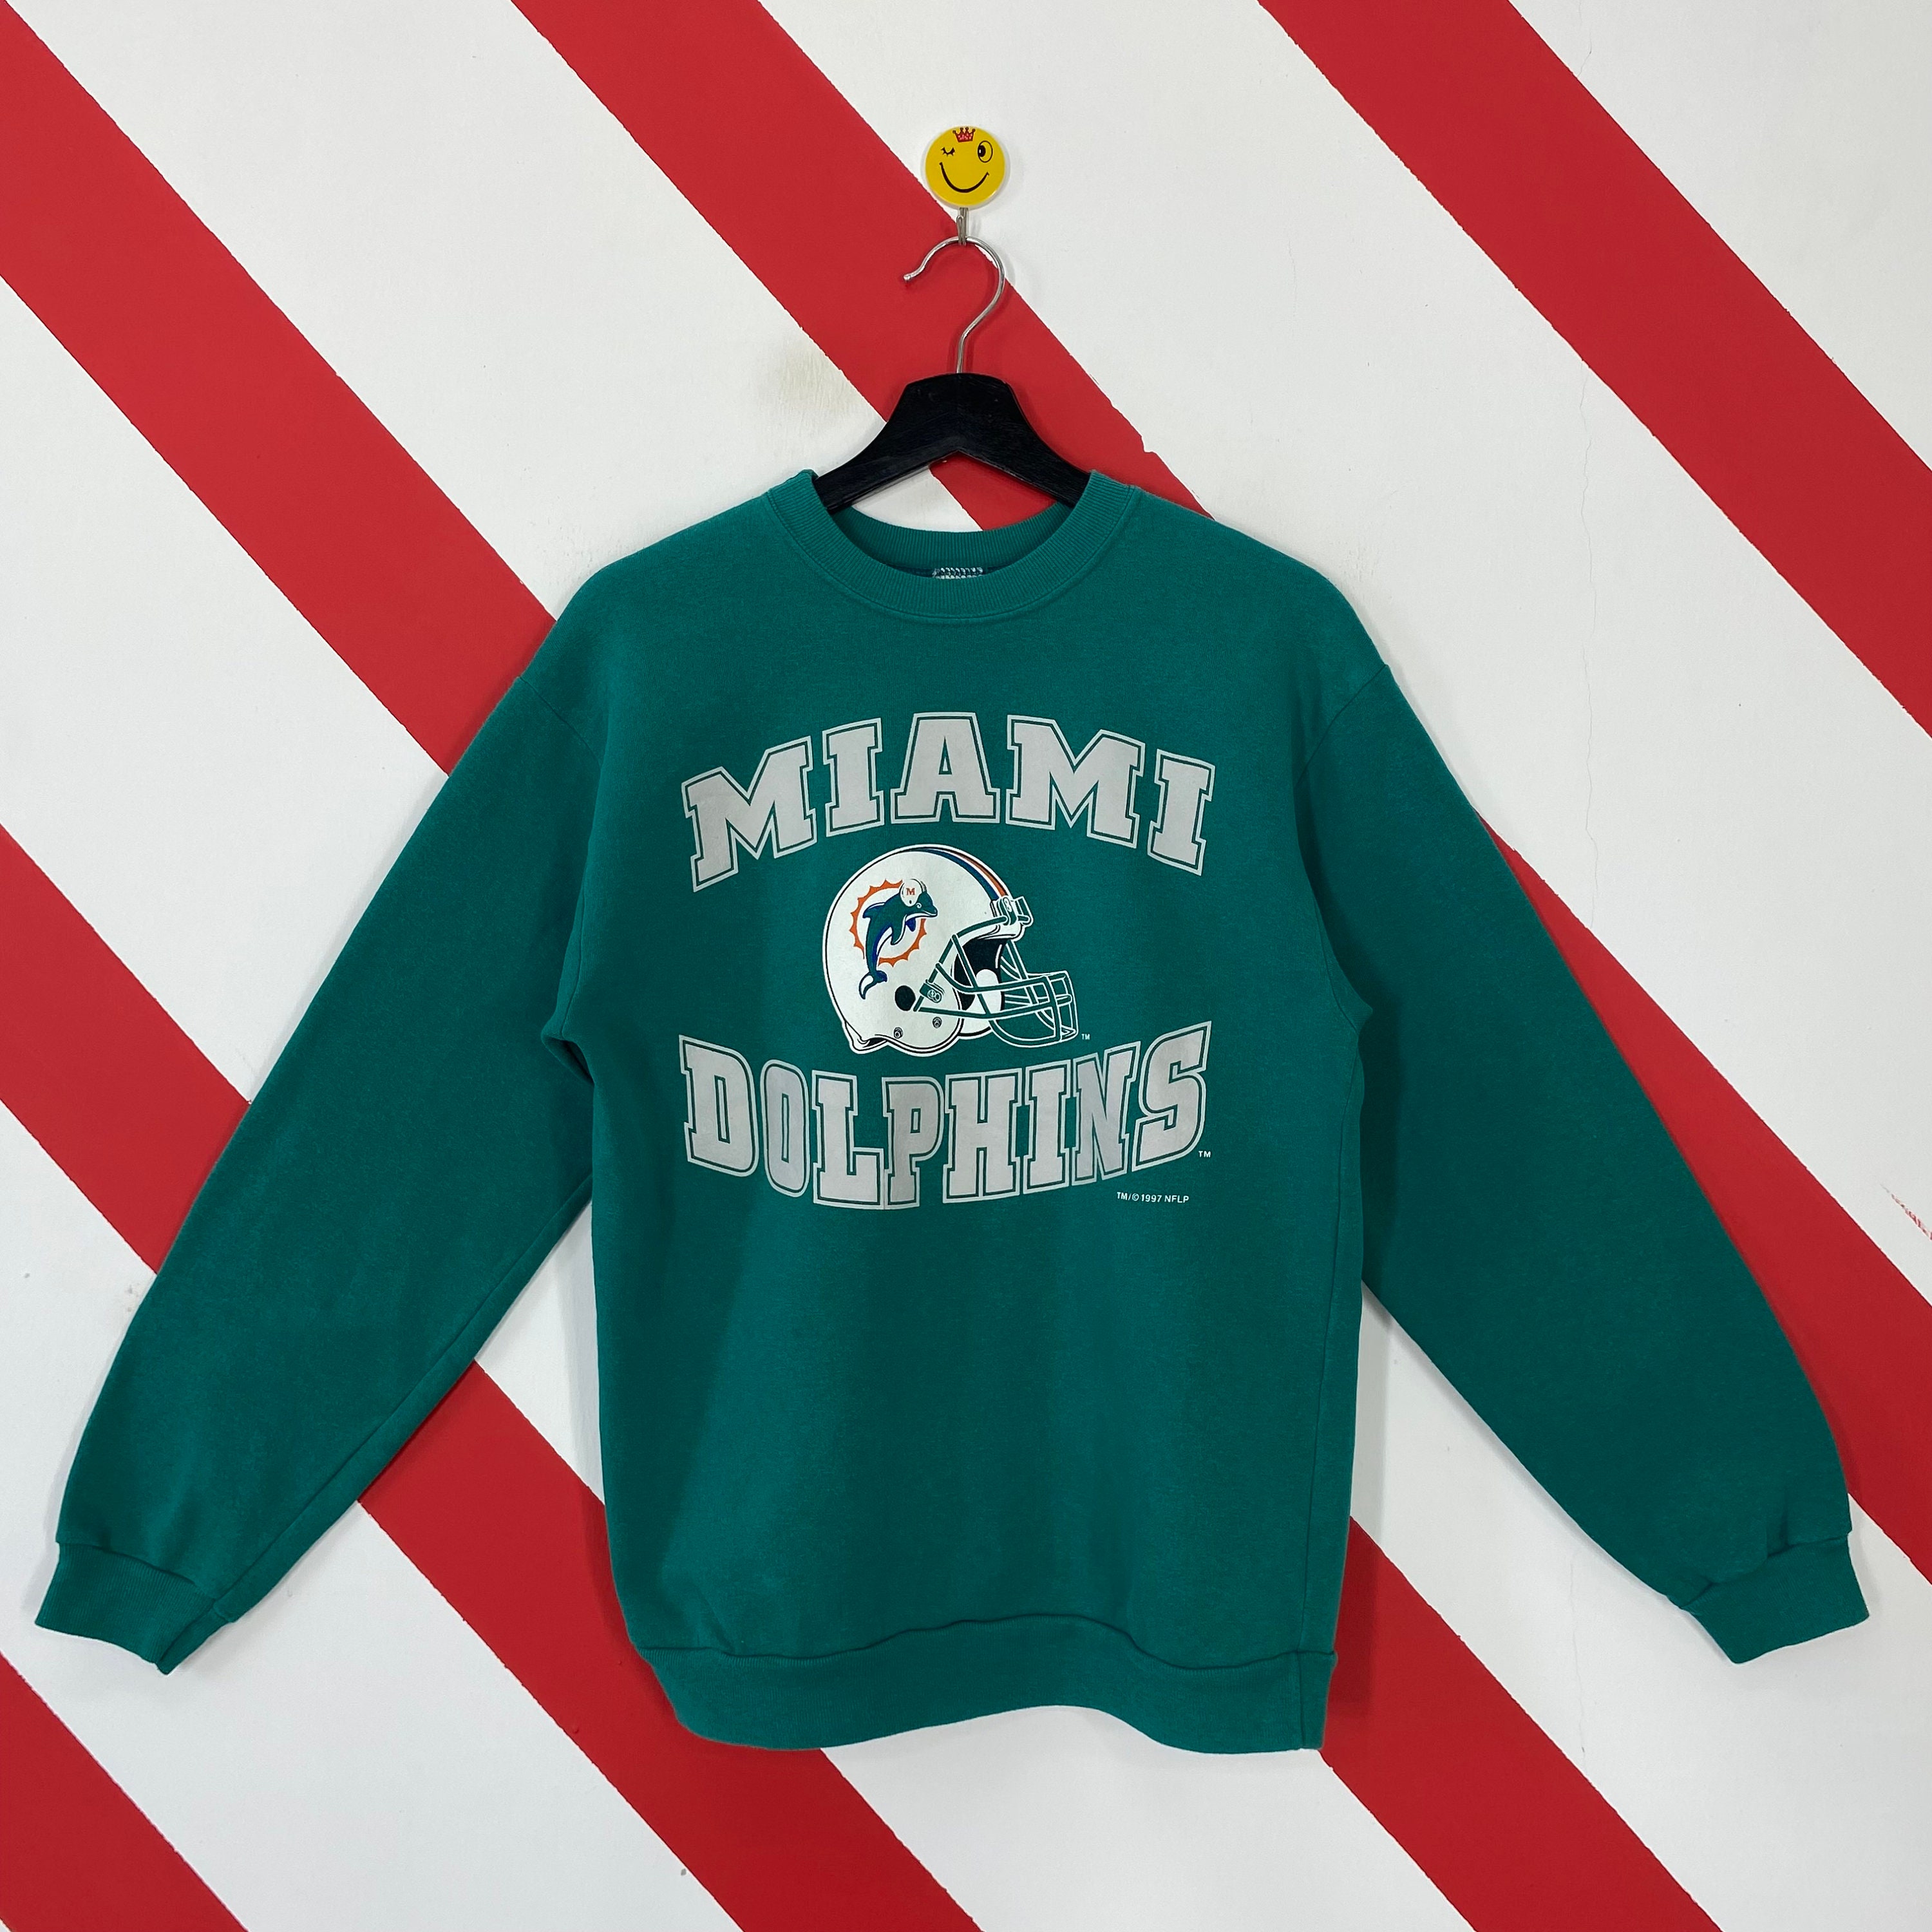 Miami Heat inspired Dolphin's jersey : r/RetroBowl